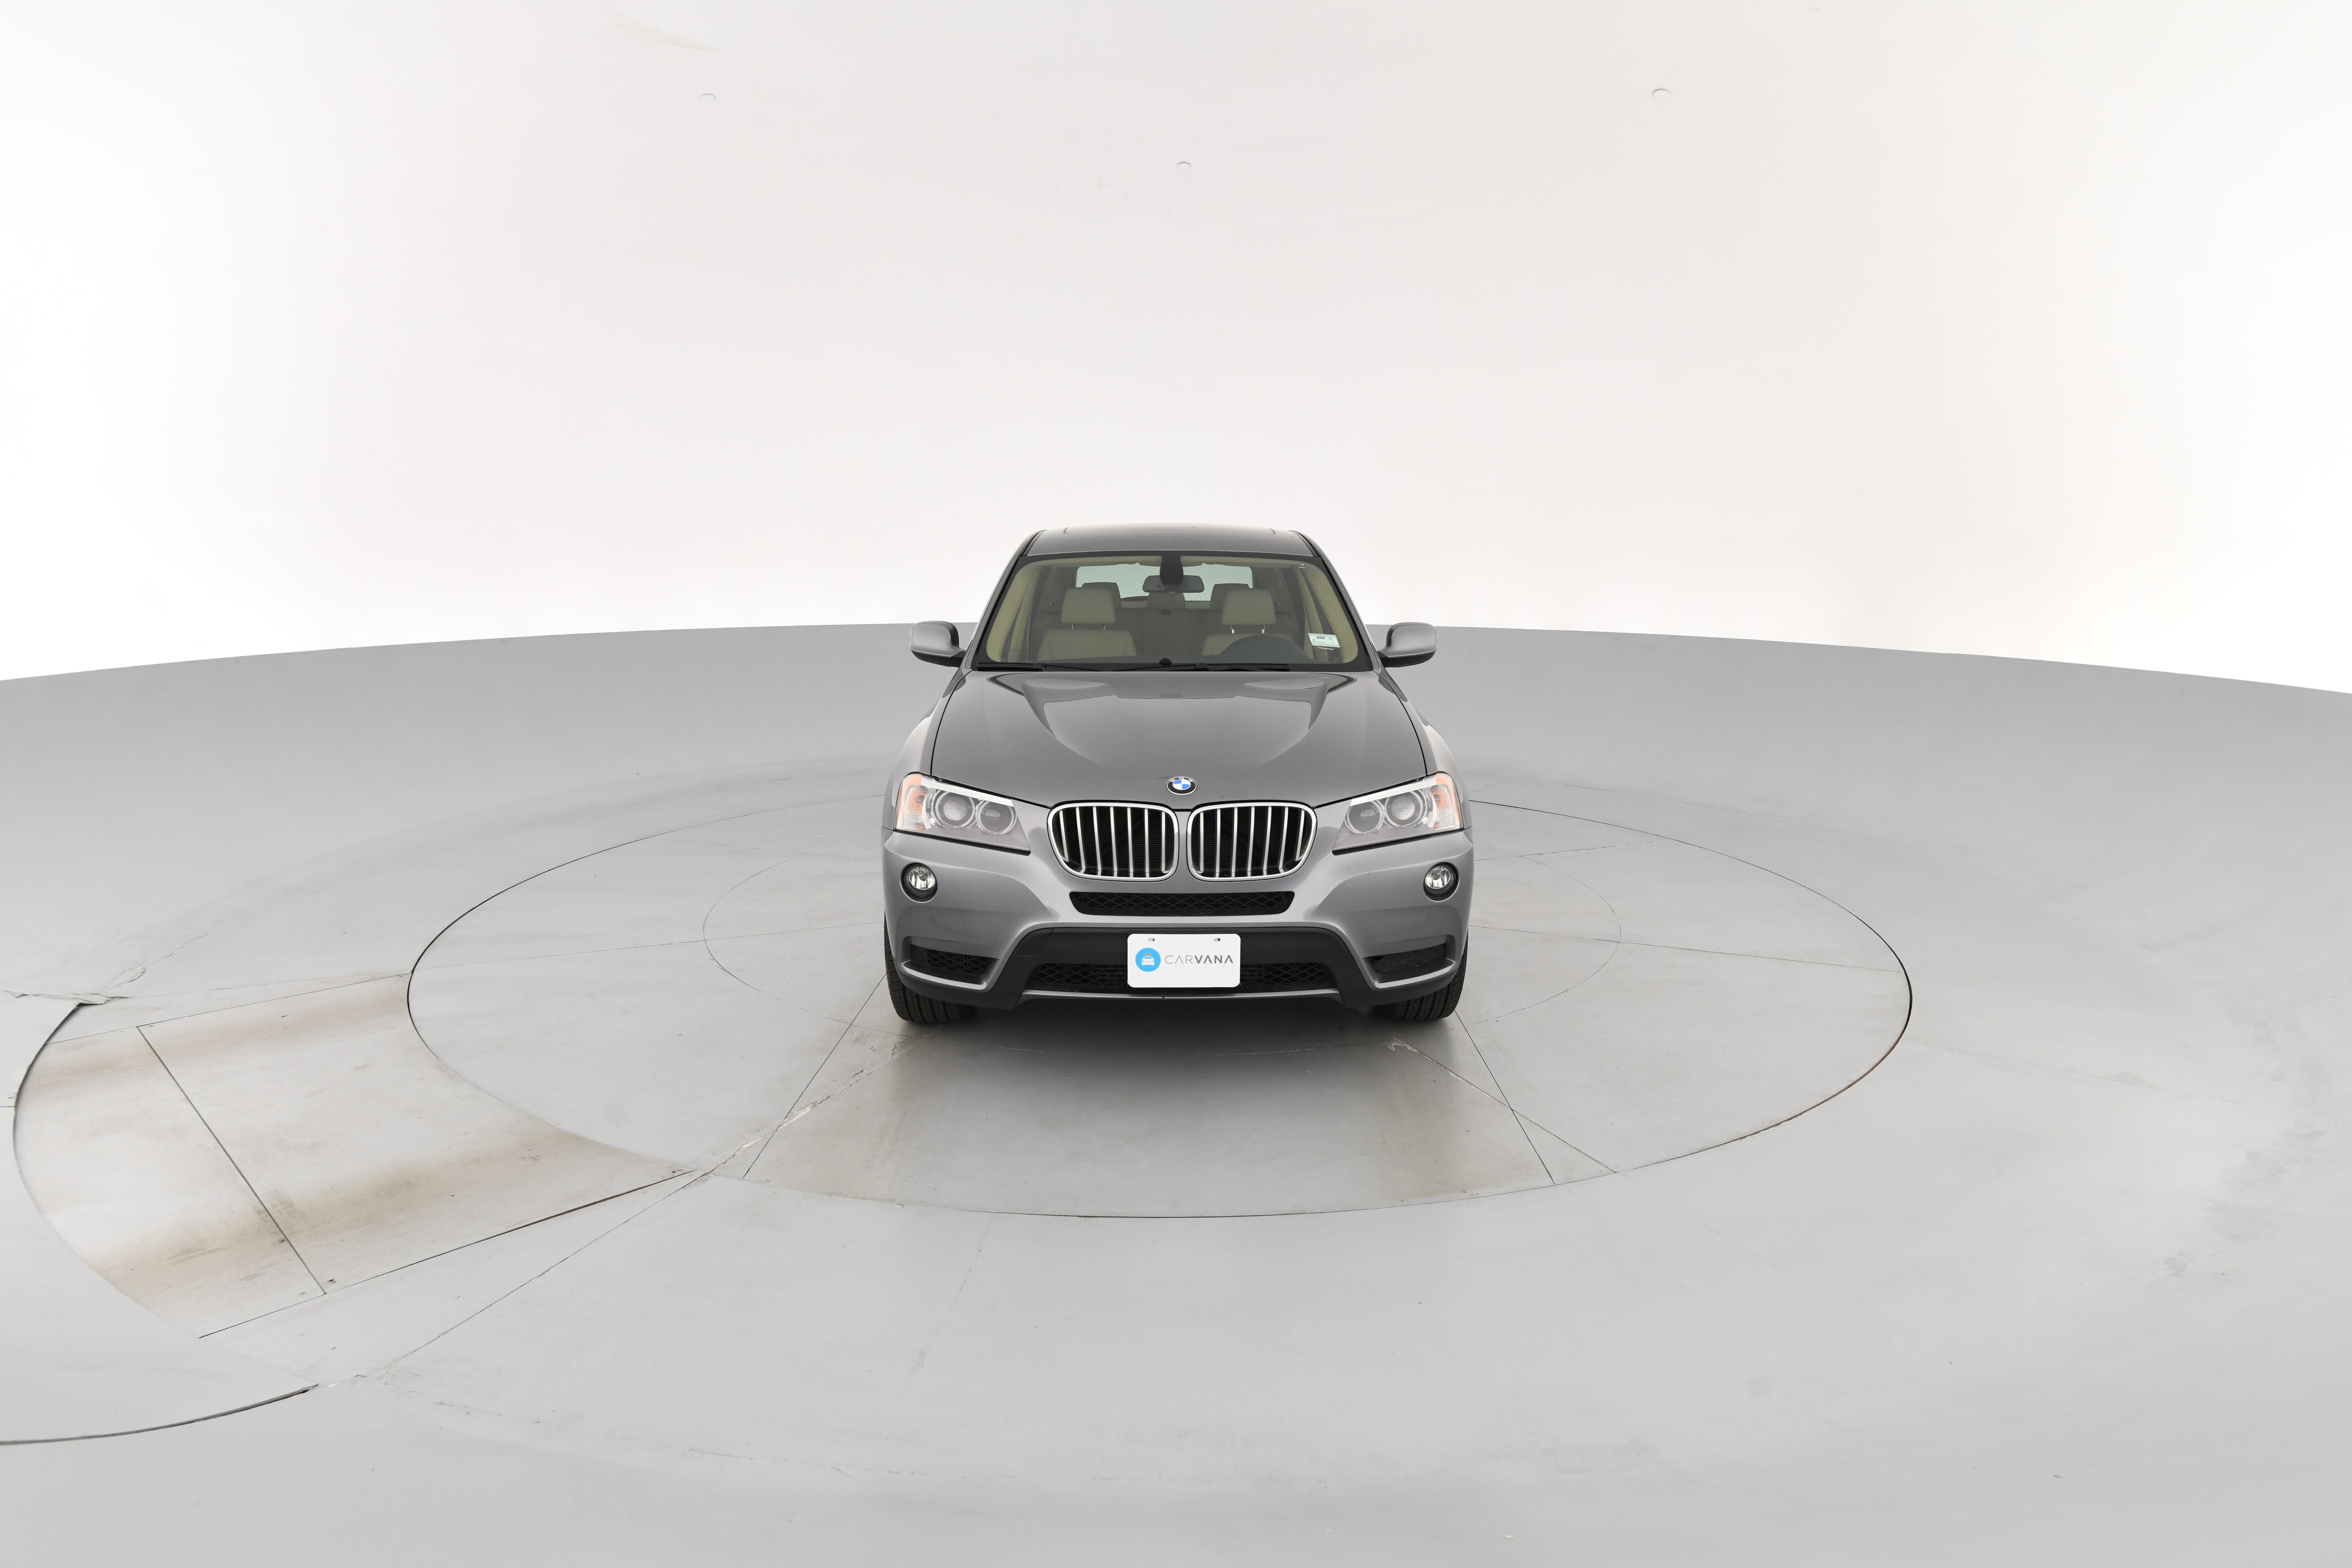 ORIGINAL 2012 BMW X3 PRESTIGE SALES BROCHURE ~ 66 PAGES ~ 9" X 11.5" ~ G12X3 